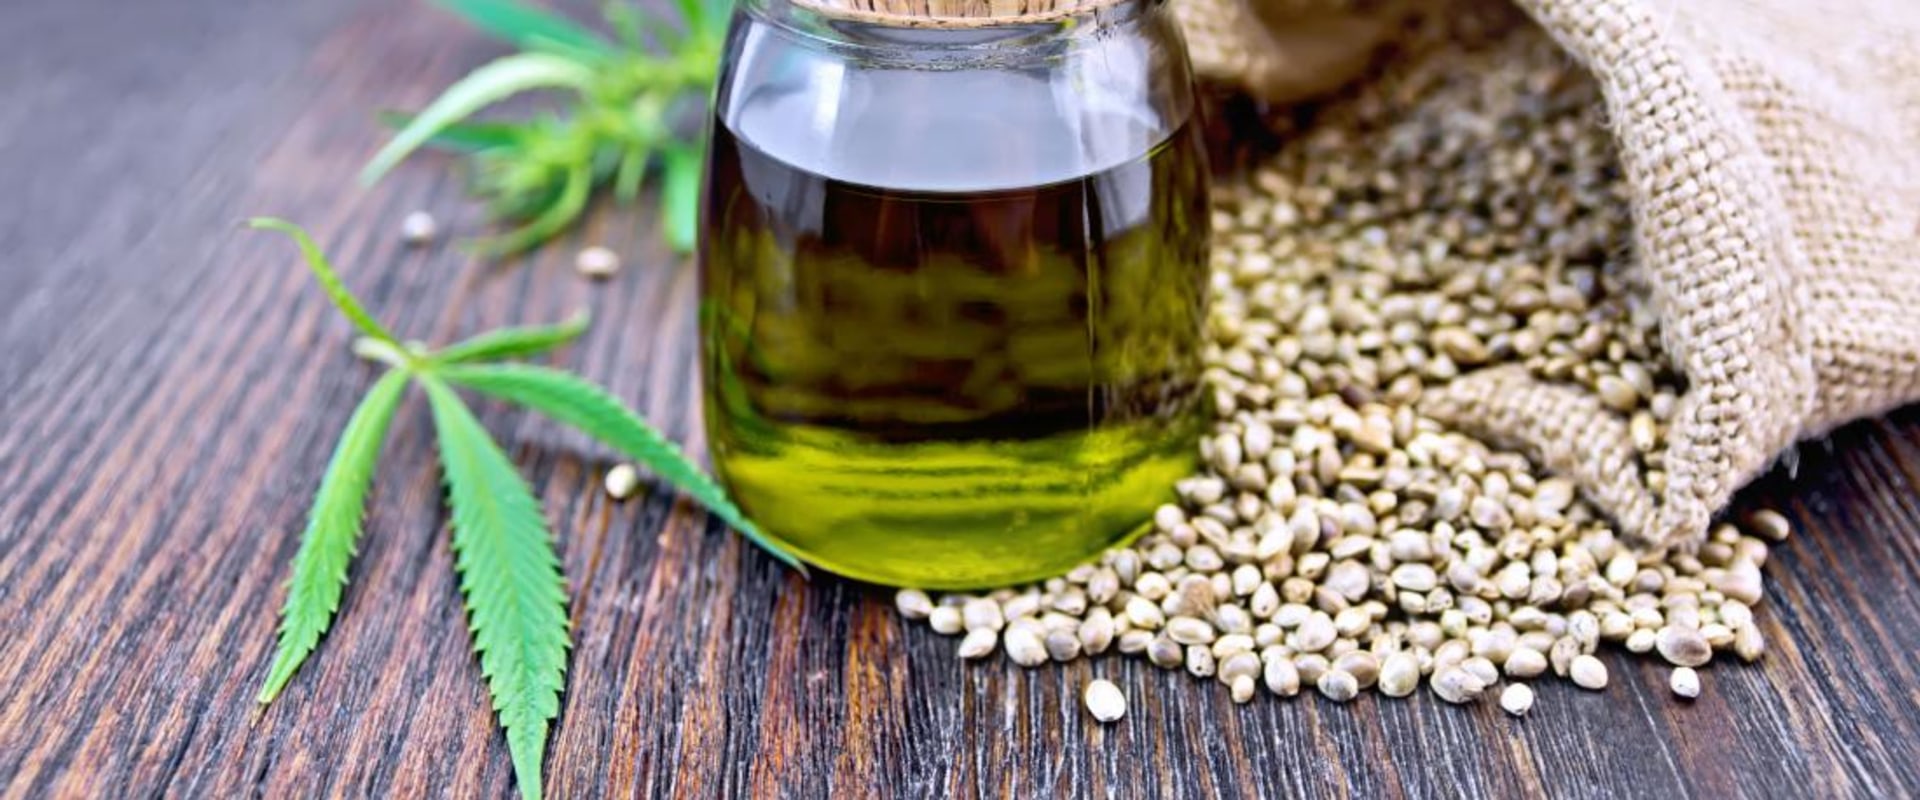 Does Hemp Seed Oil Contain CBD?